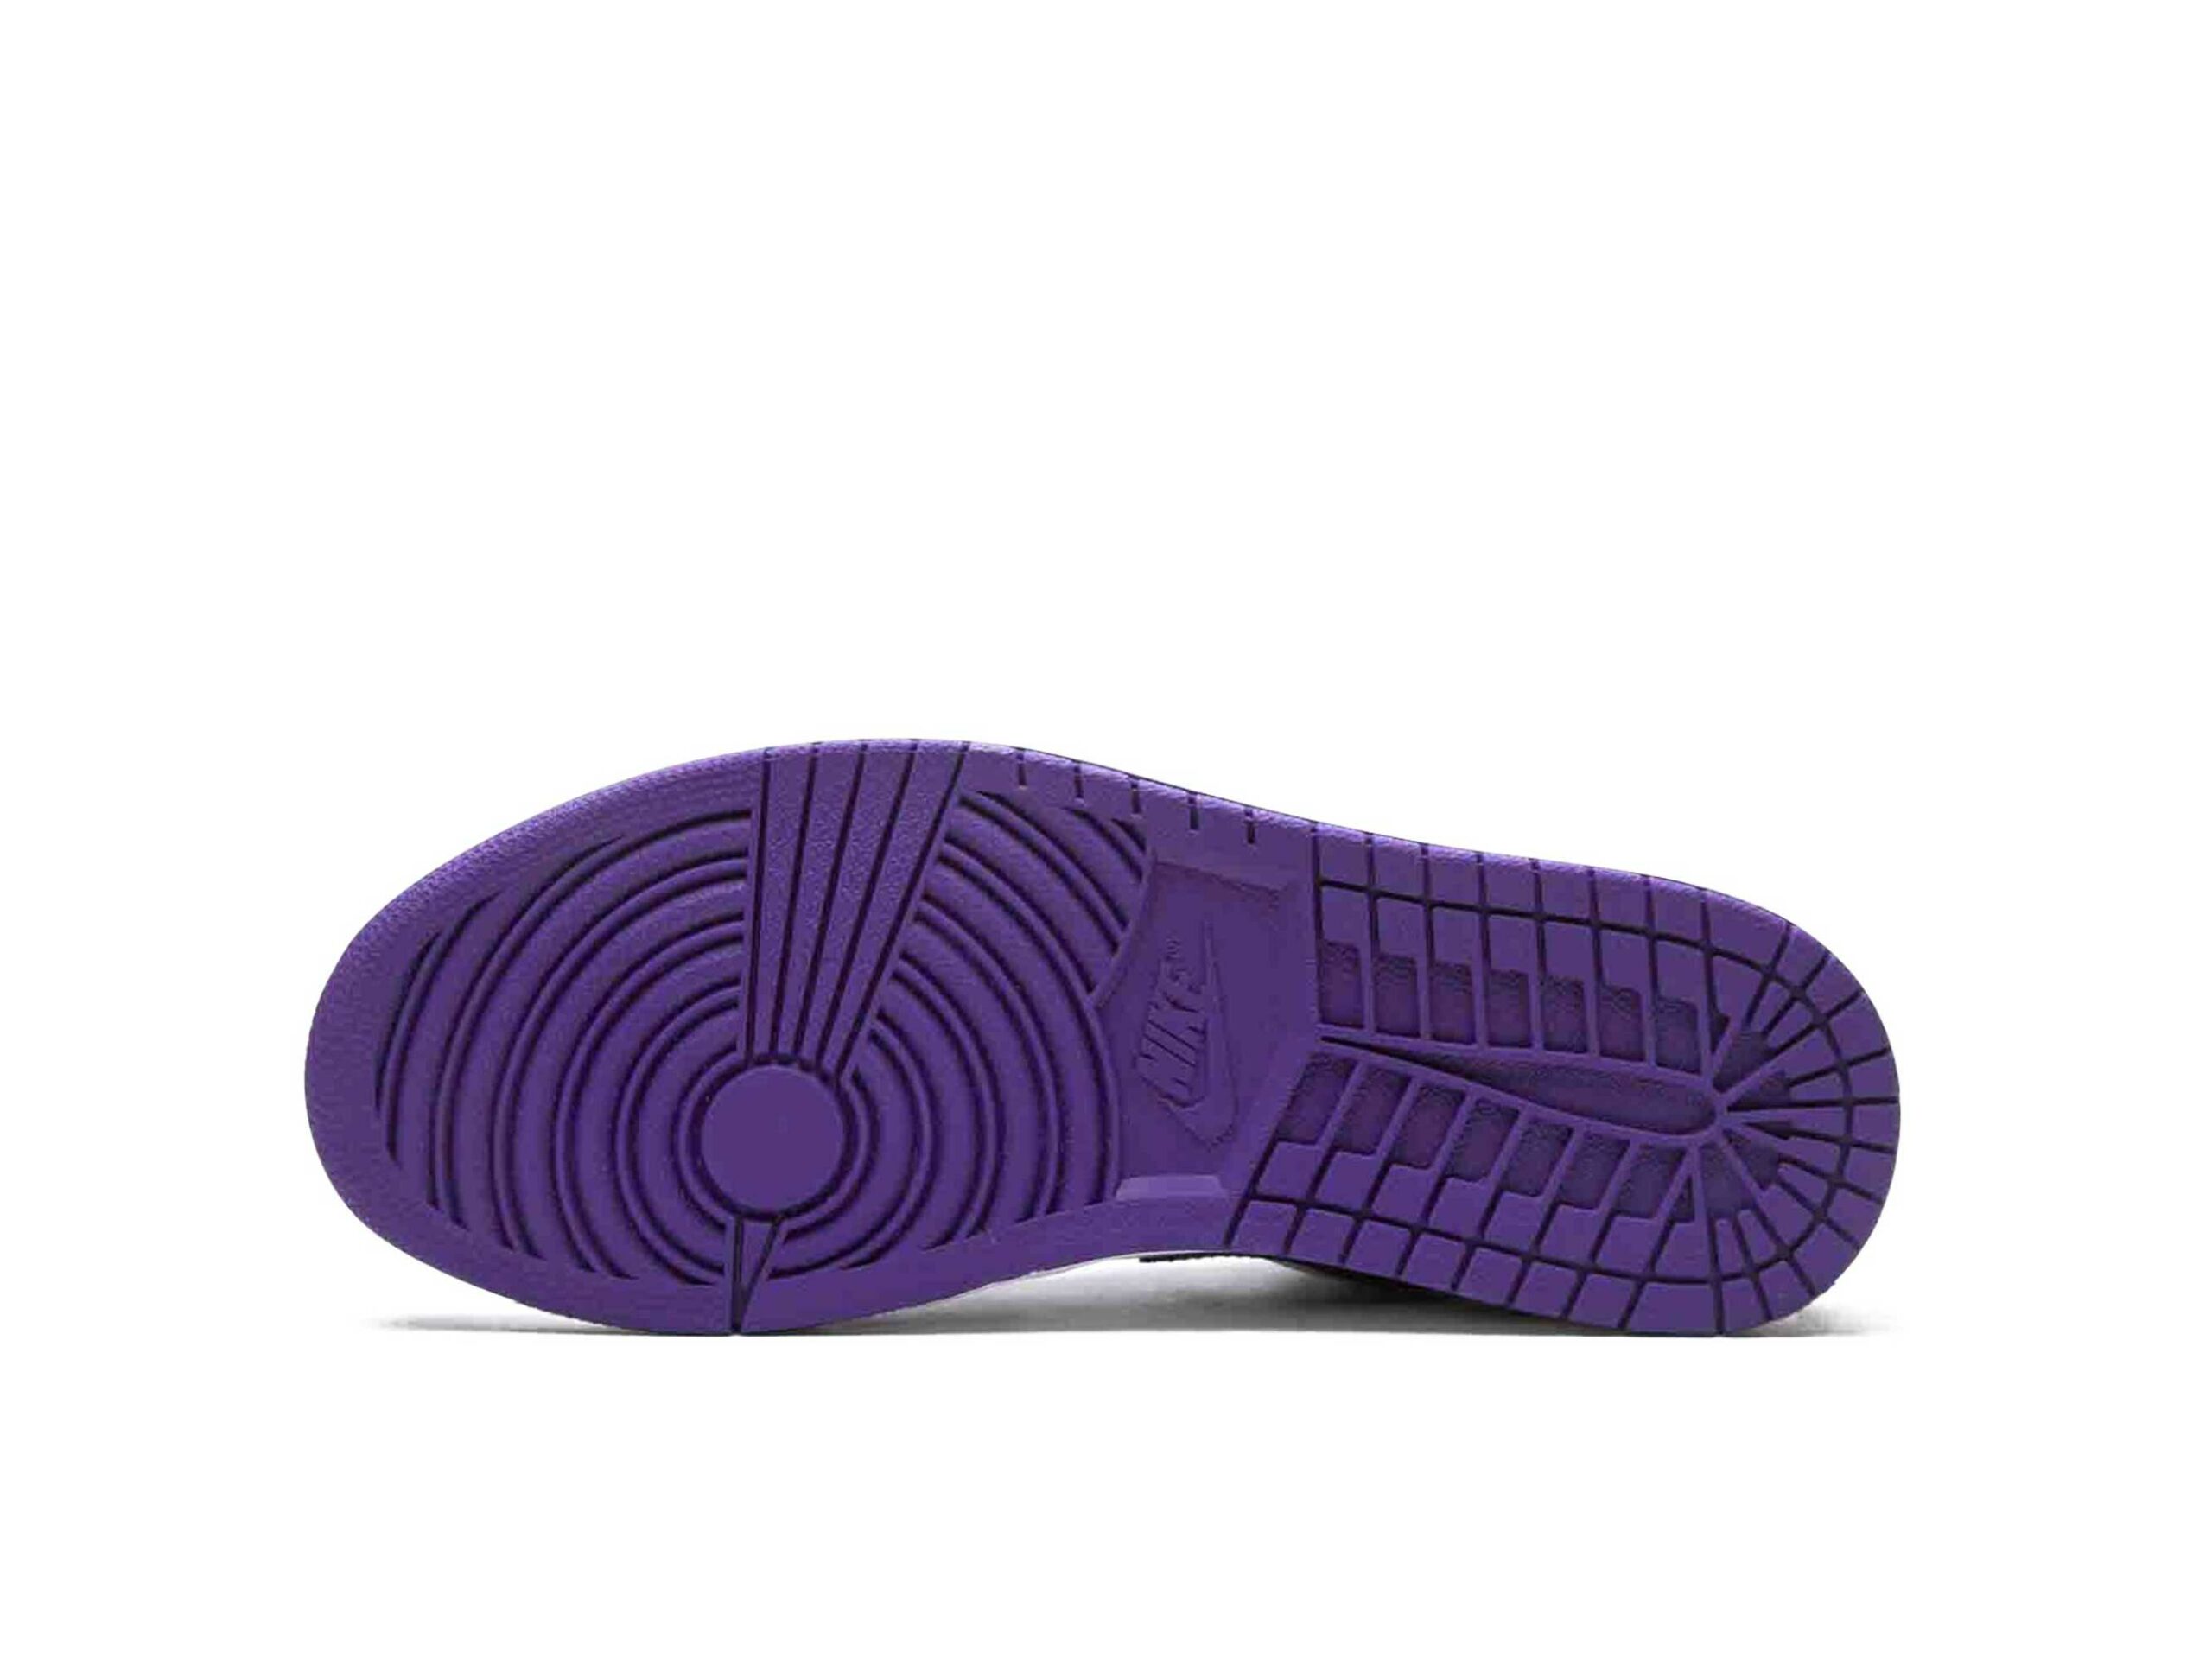 nike air jordan 1 low court purple 553558_500 купить